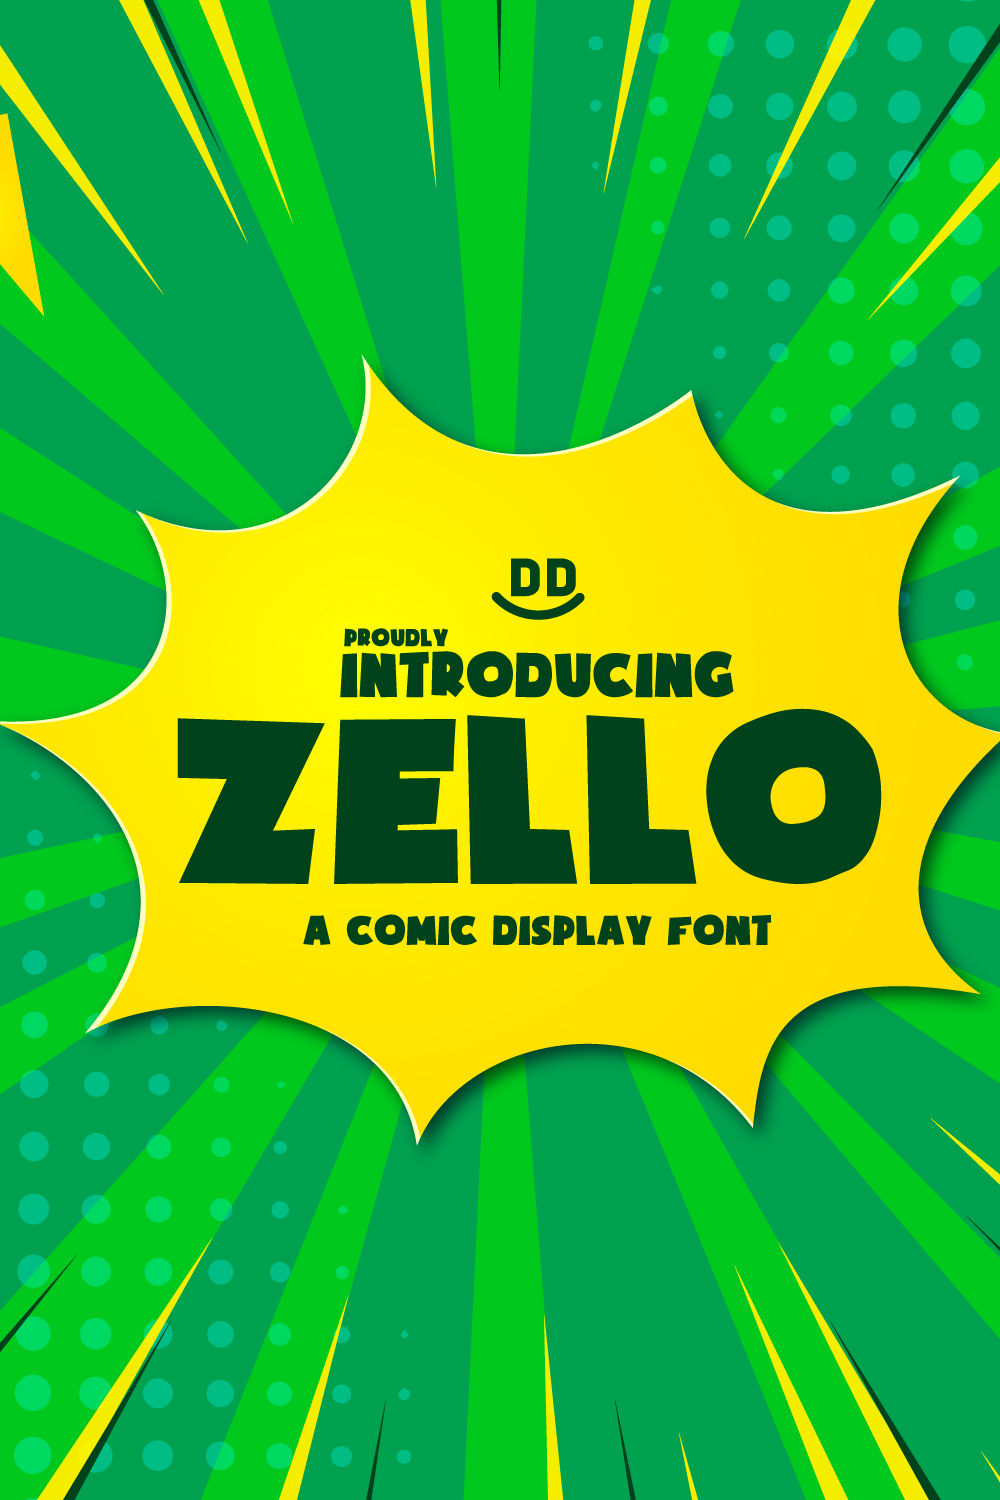 Zello comic display font pinterest preview image.